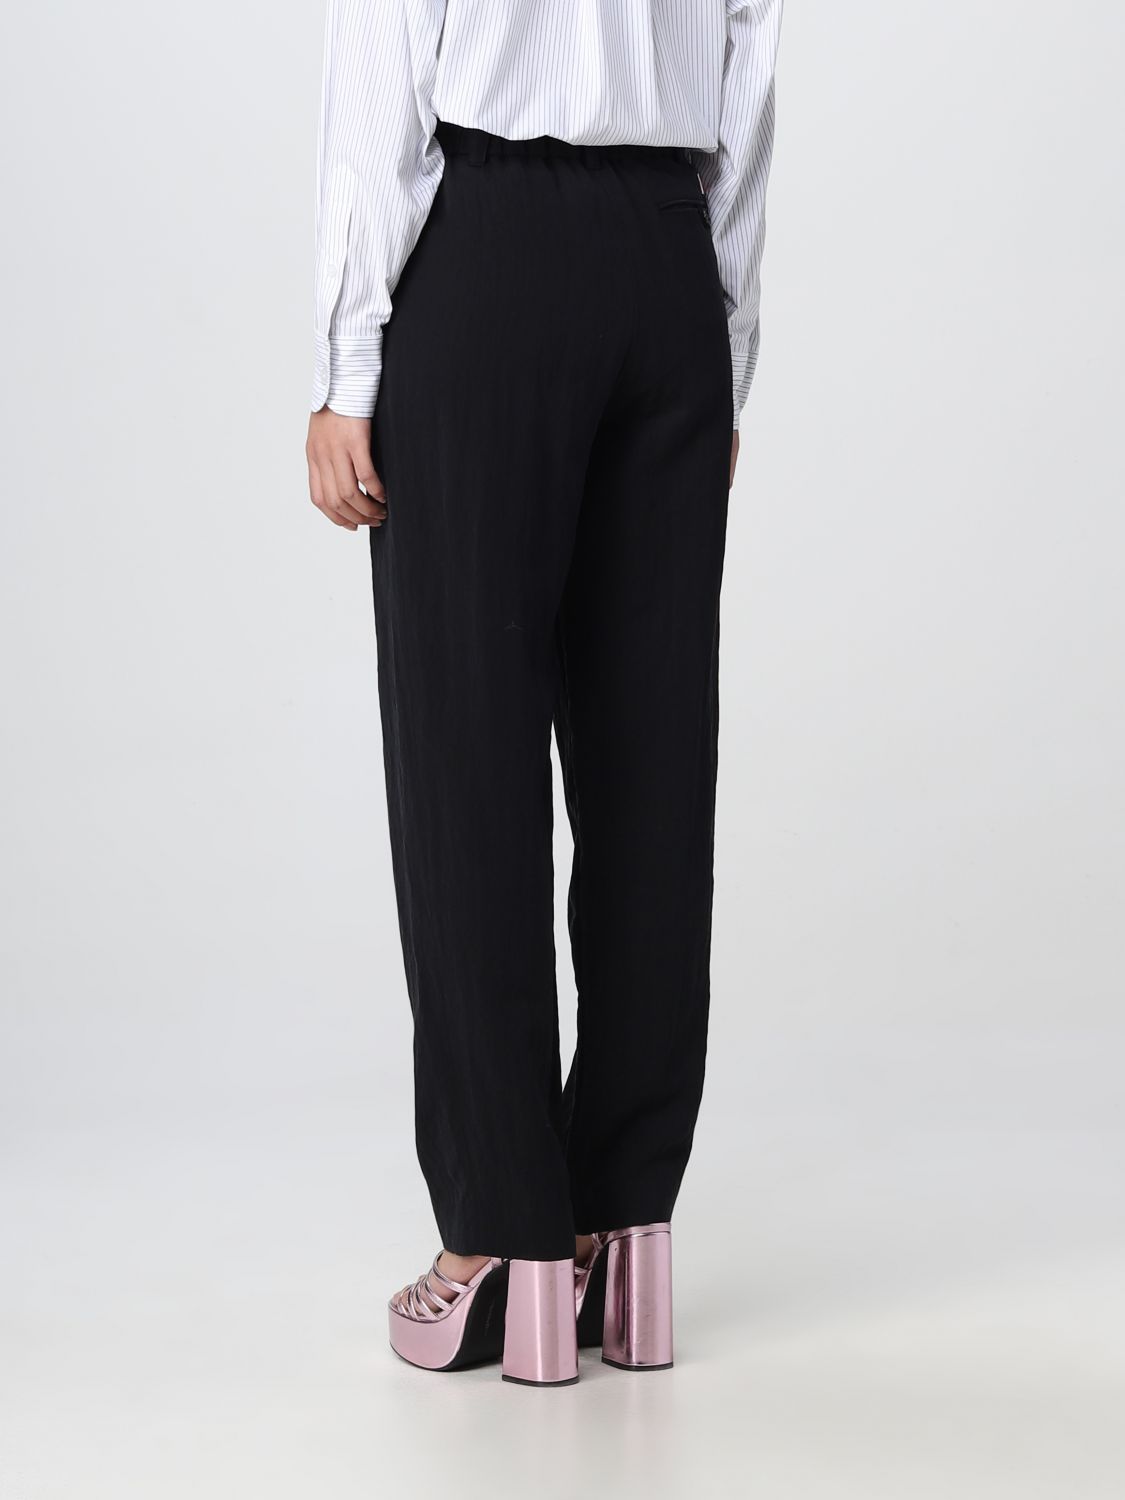 KENZO: pants for woman - Black | Kenzo pants FD52PA0779FB online on ...